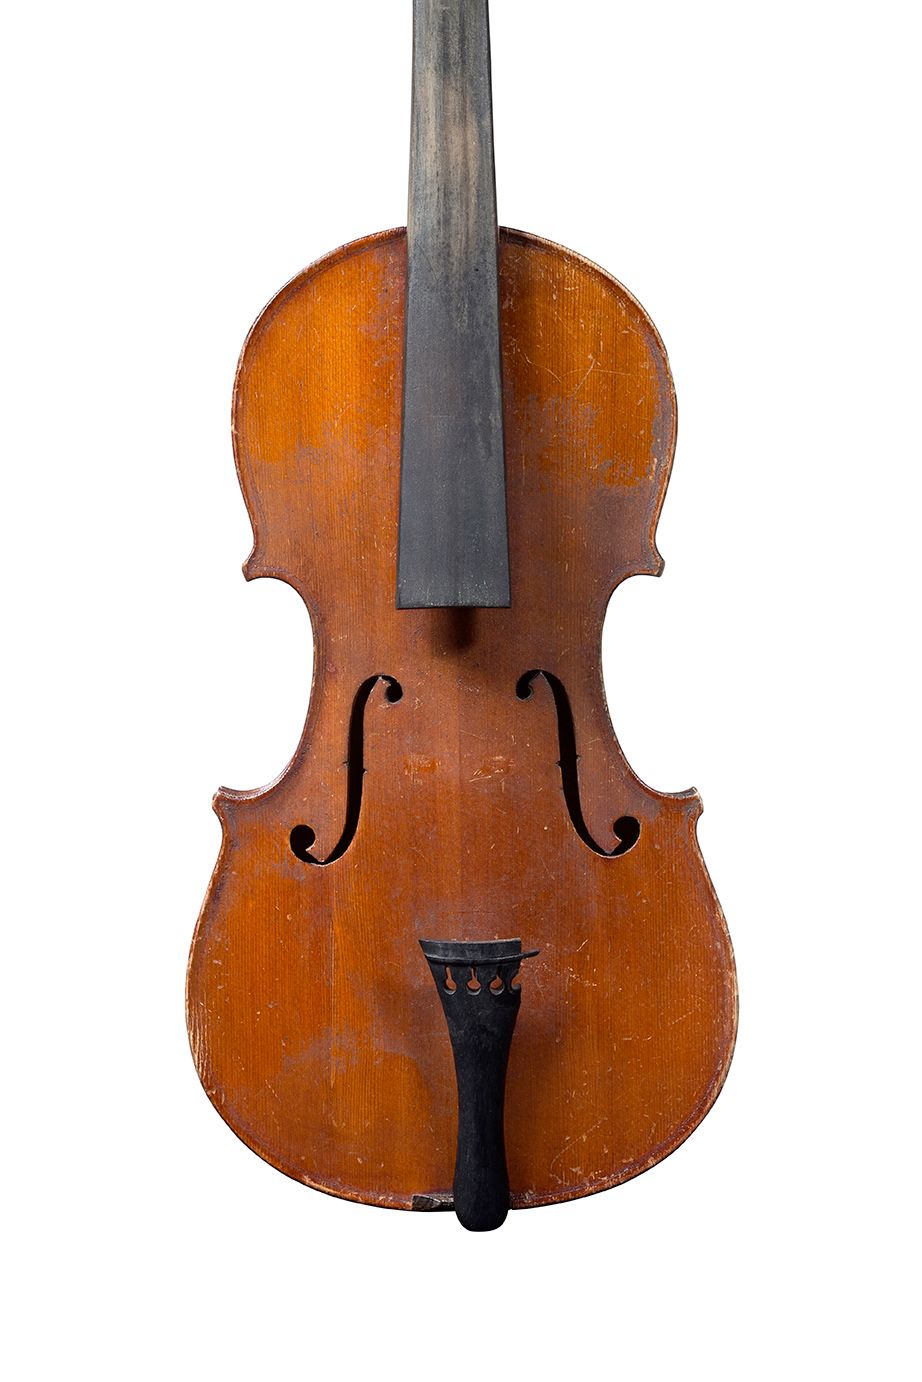 Null 学习小提琴尺寸3/4
工业化制造，没有螺纹
桌子上的原件
状况良好 
背面338毫米